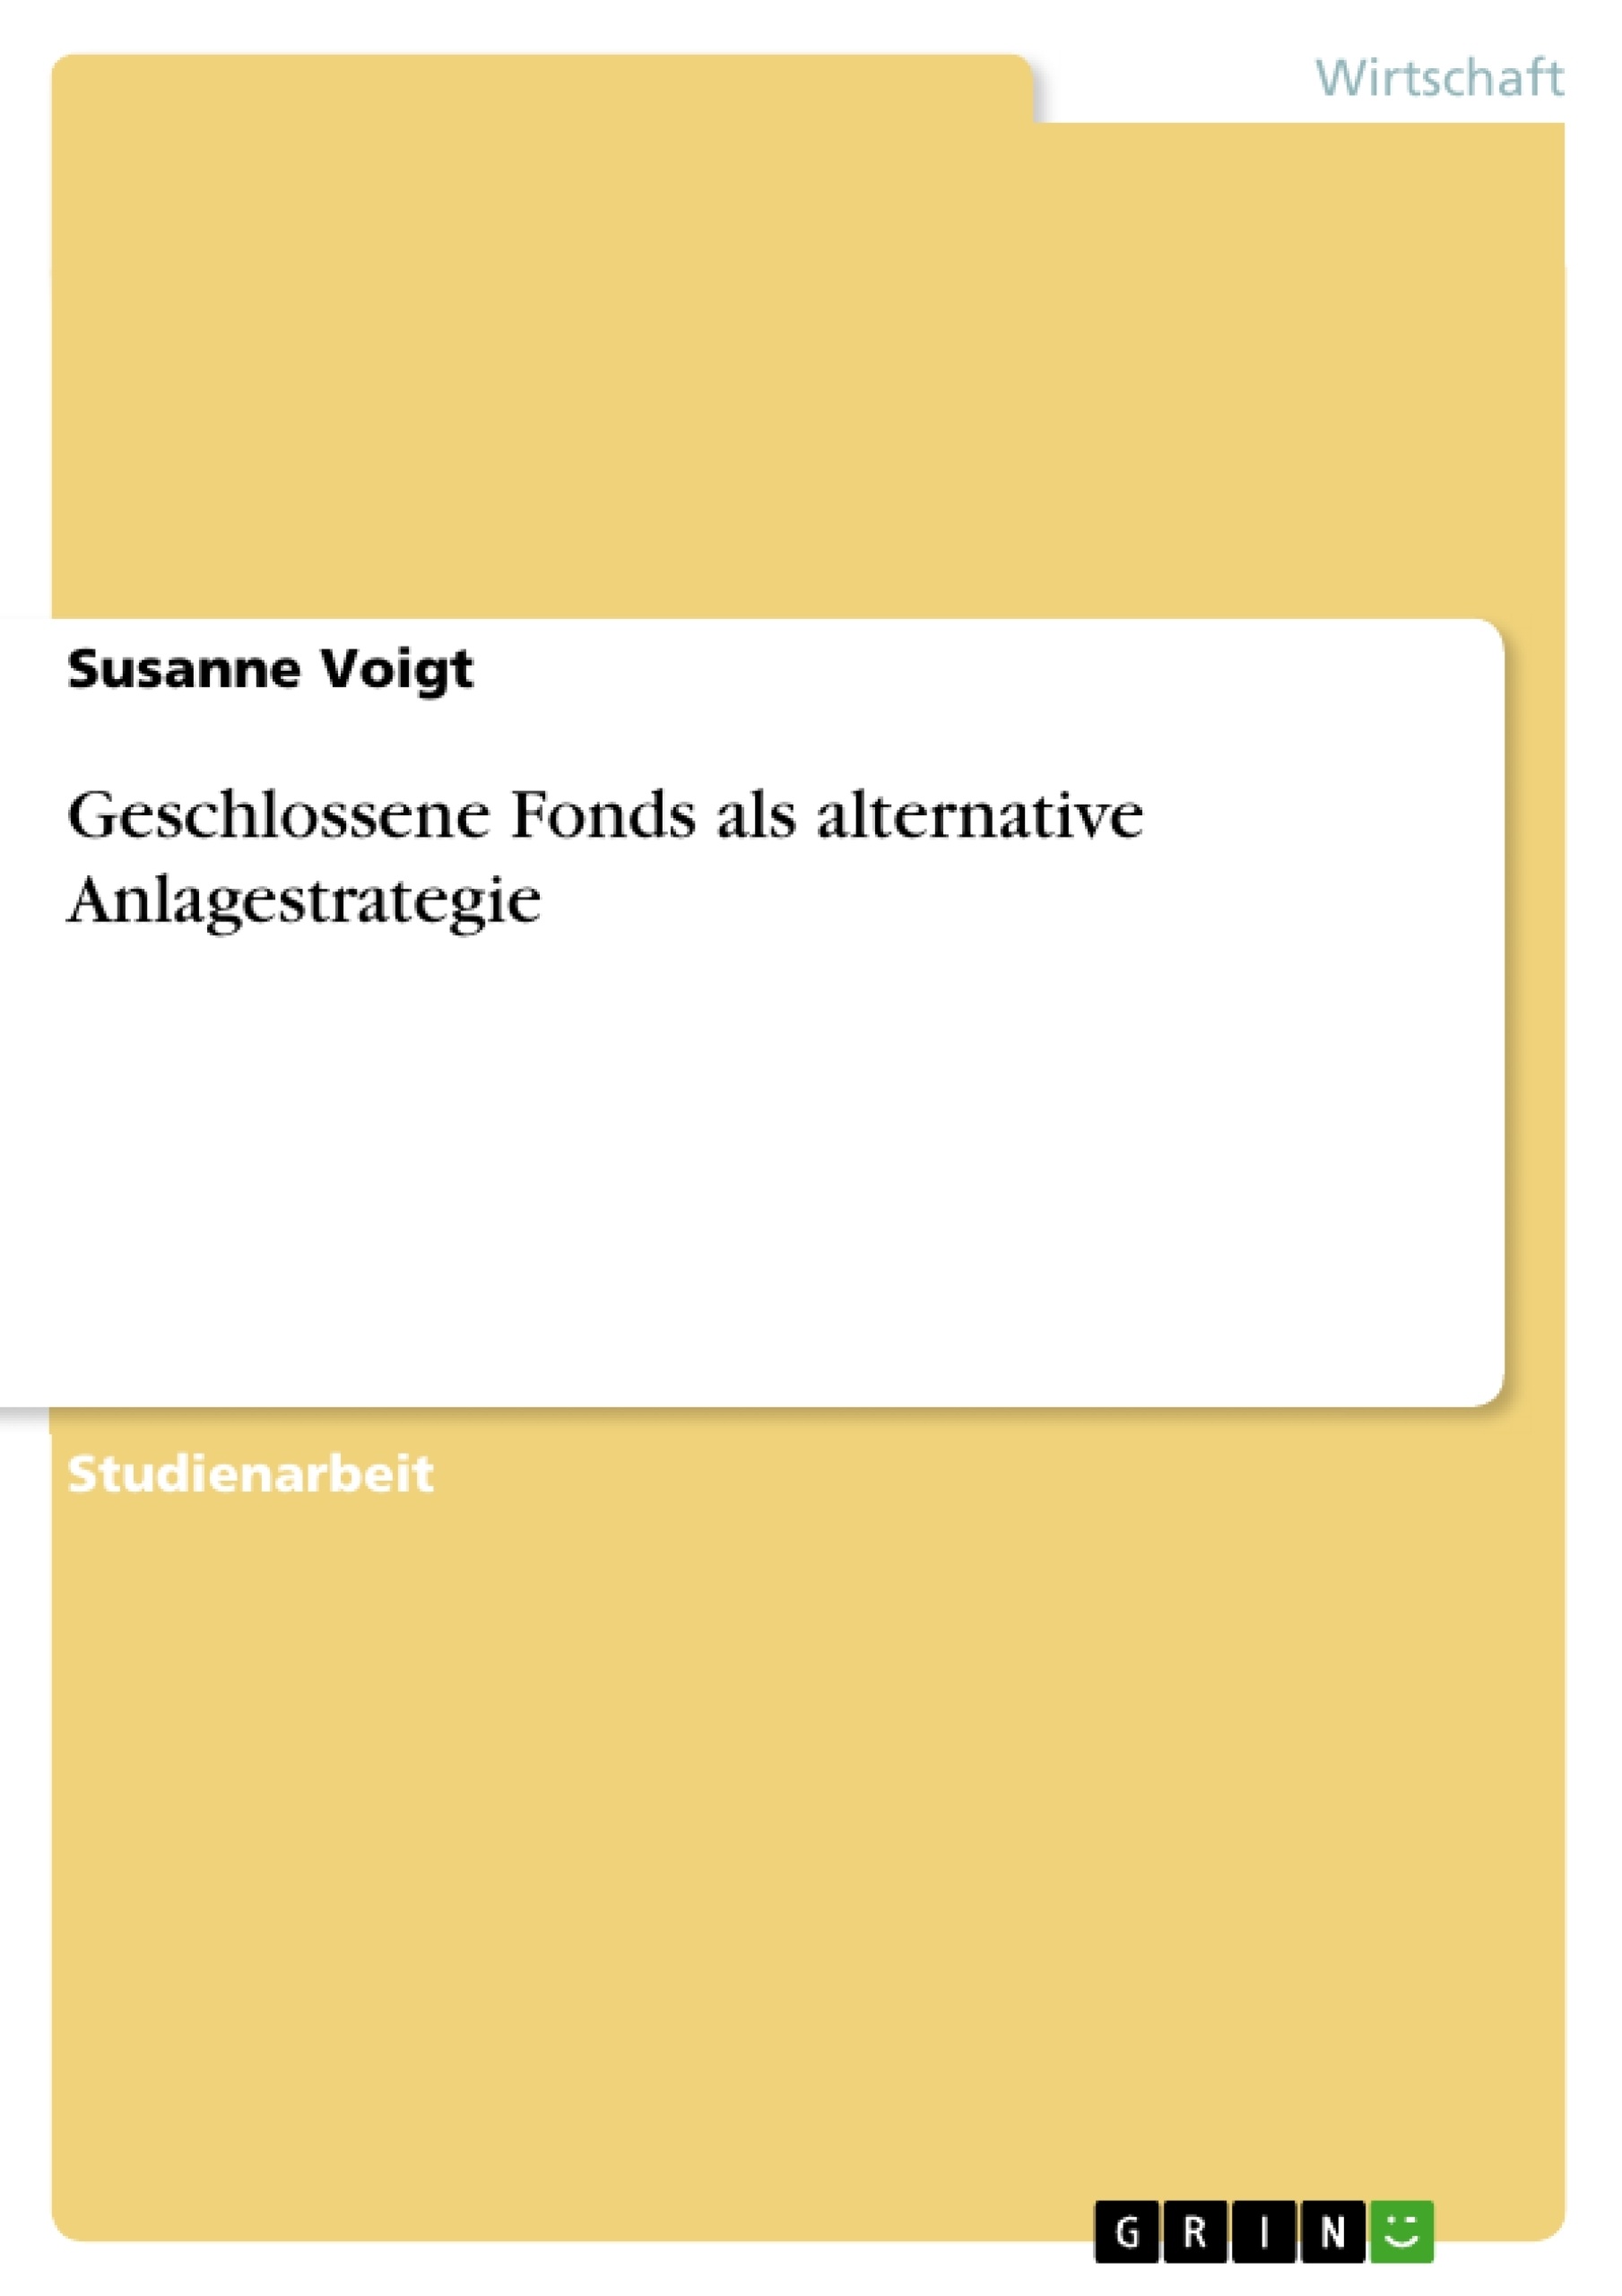 Title: Geschlossene Fonds als alternative Anlagestrategie	